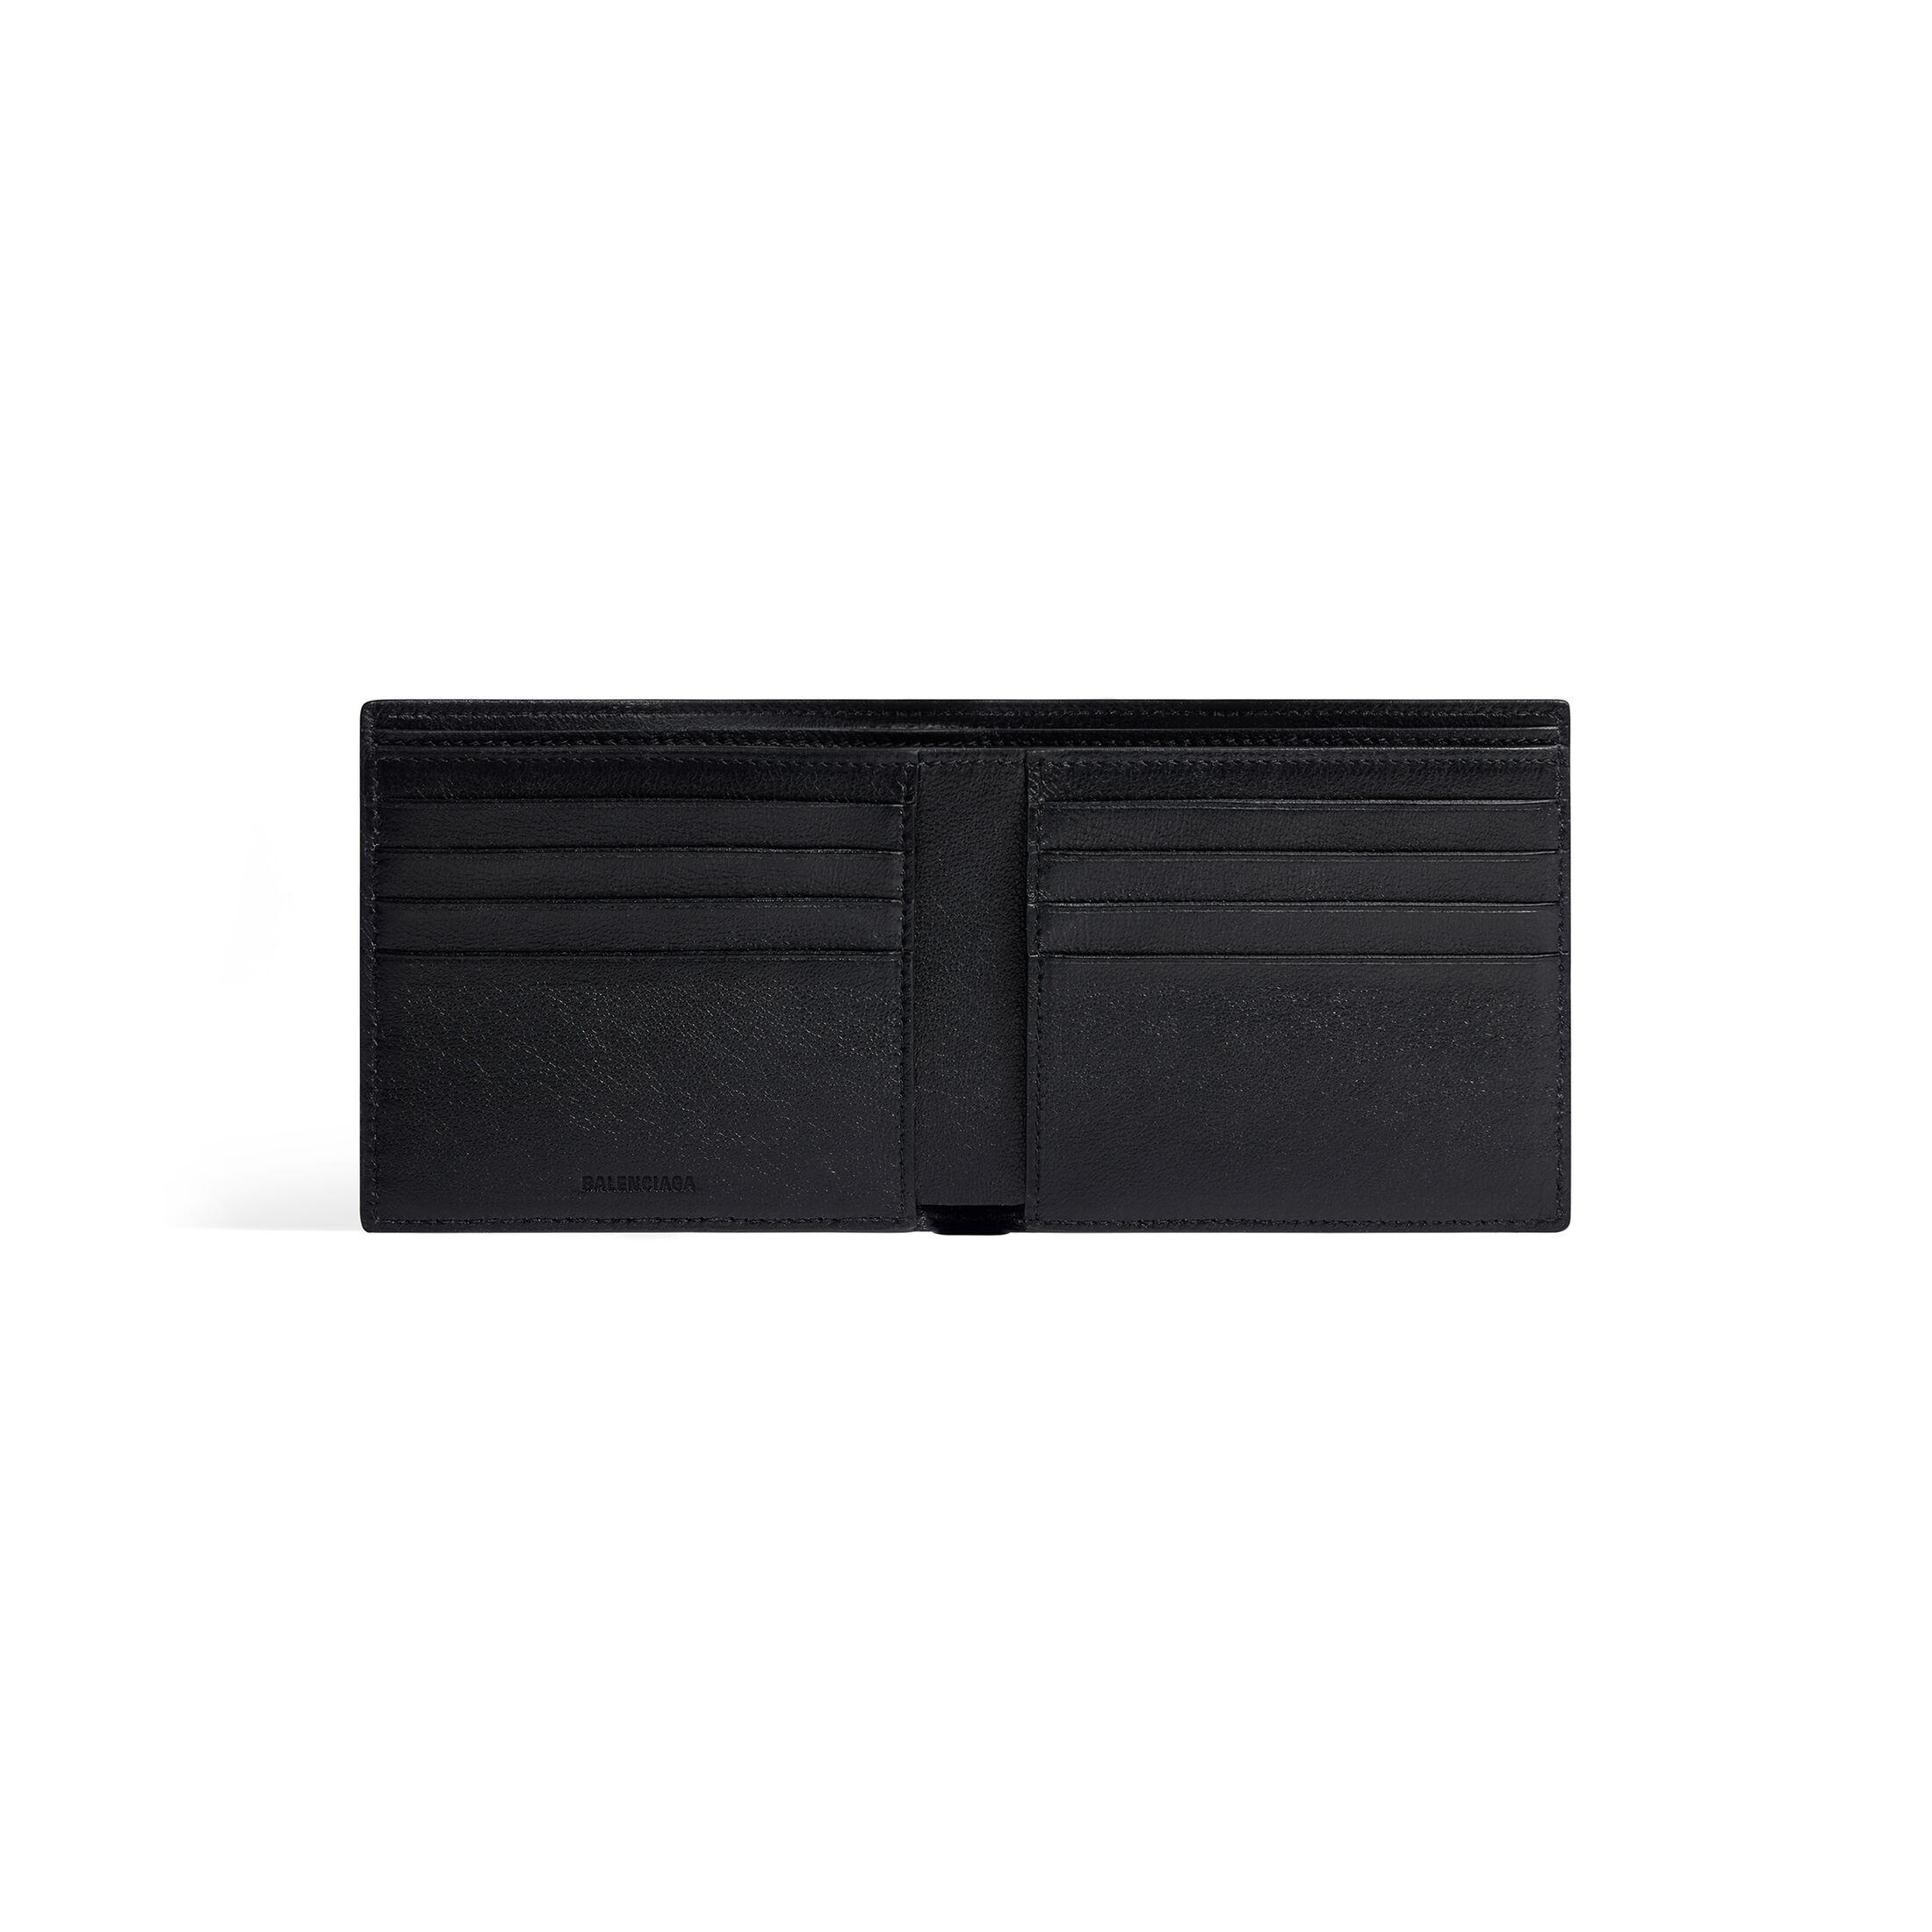 Ví Balenciaga Cash Square Folded Wallet Box Nam Đen Trắng